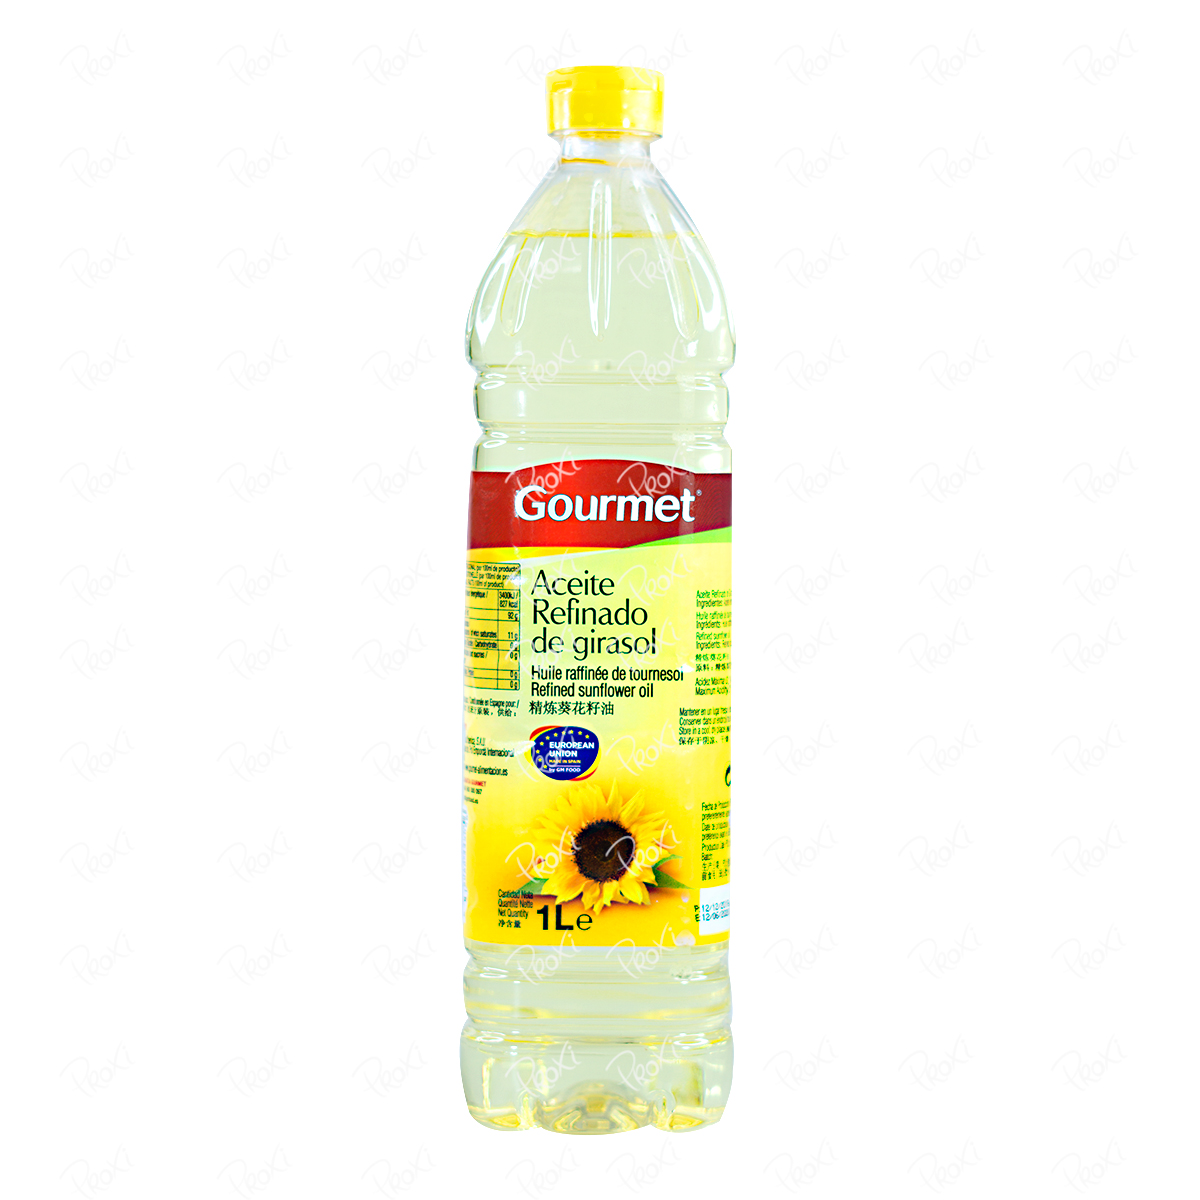 Aceite Vegetal Puro de Girasol 1-2-3 1 lt